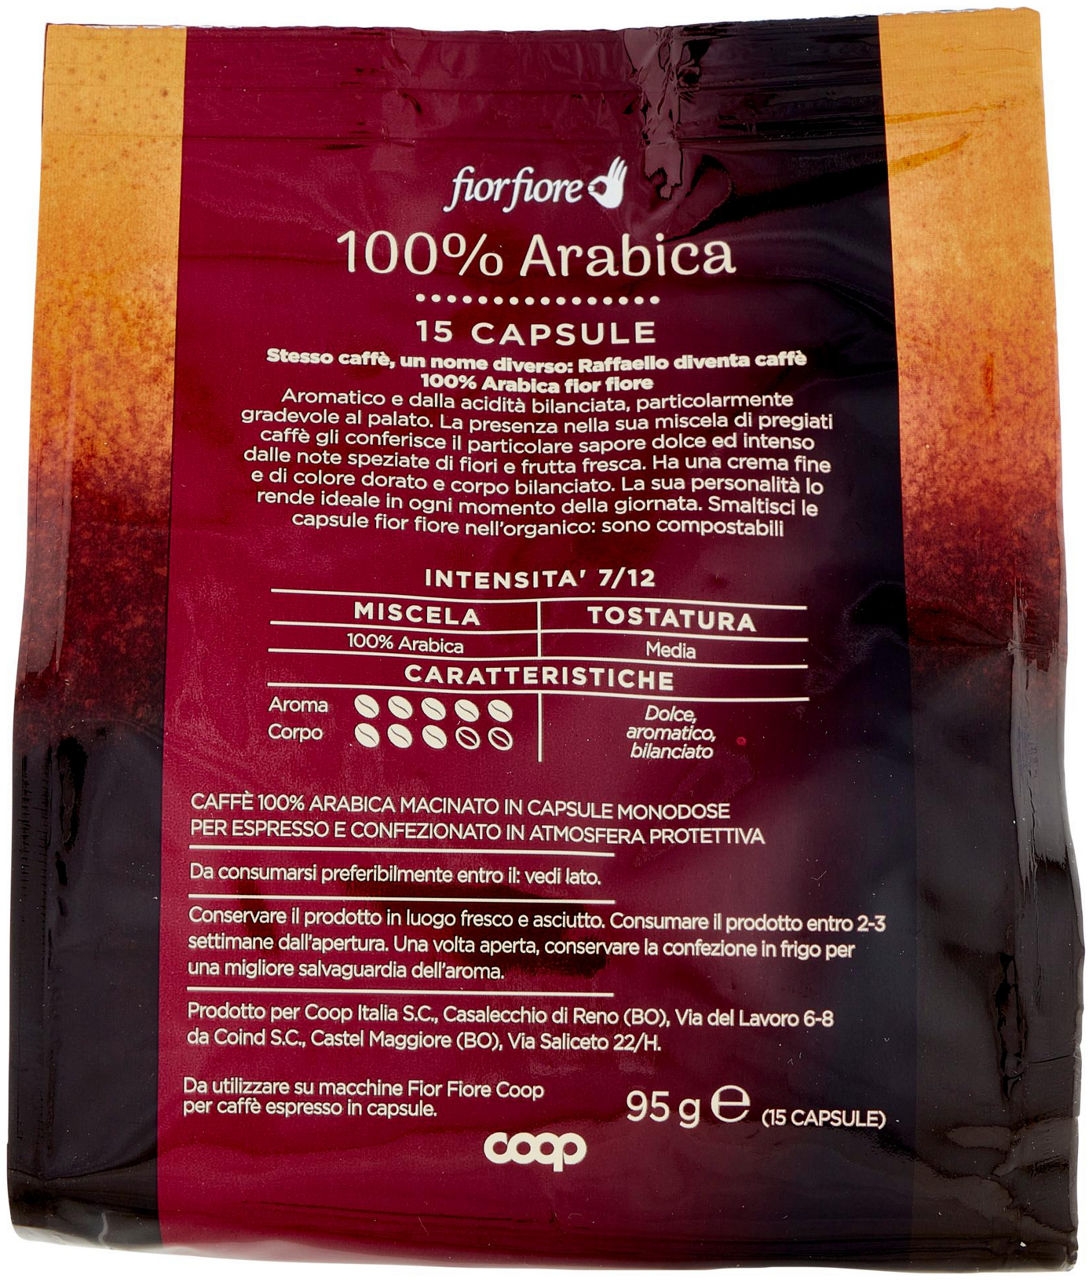 CAFFE' 100% ARABICA CAPSULE COMPOSTABILI "RAFFAELLO" FIOR FIORE COOP PZ 15 G 95 - 2